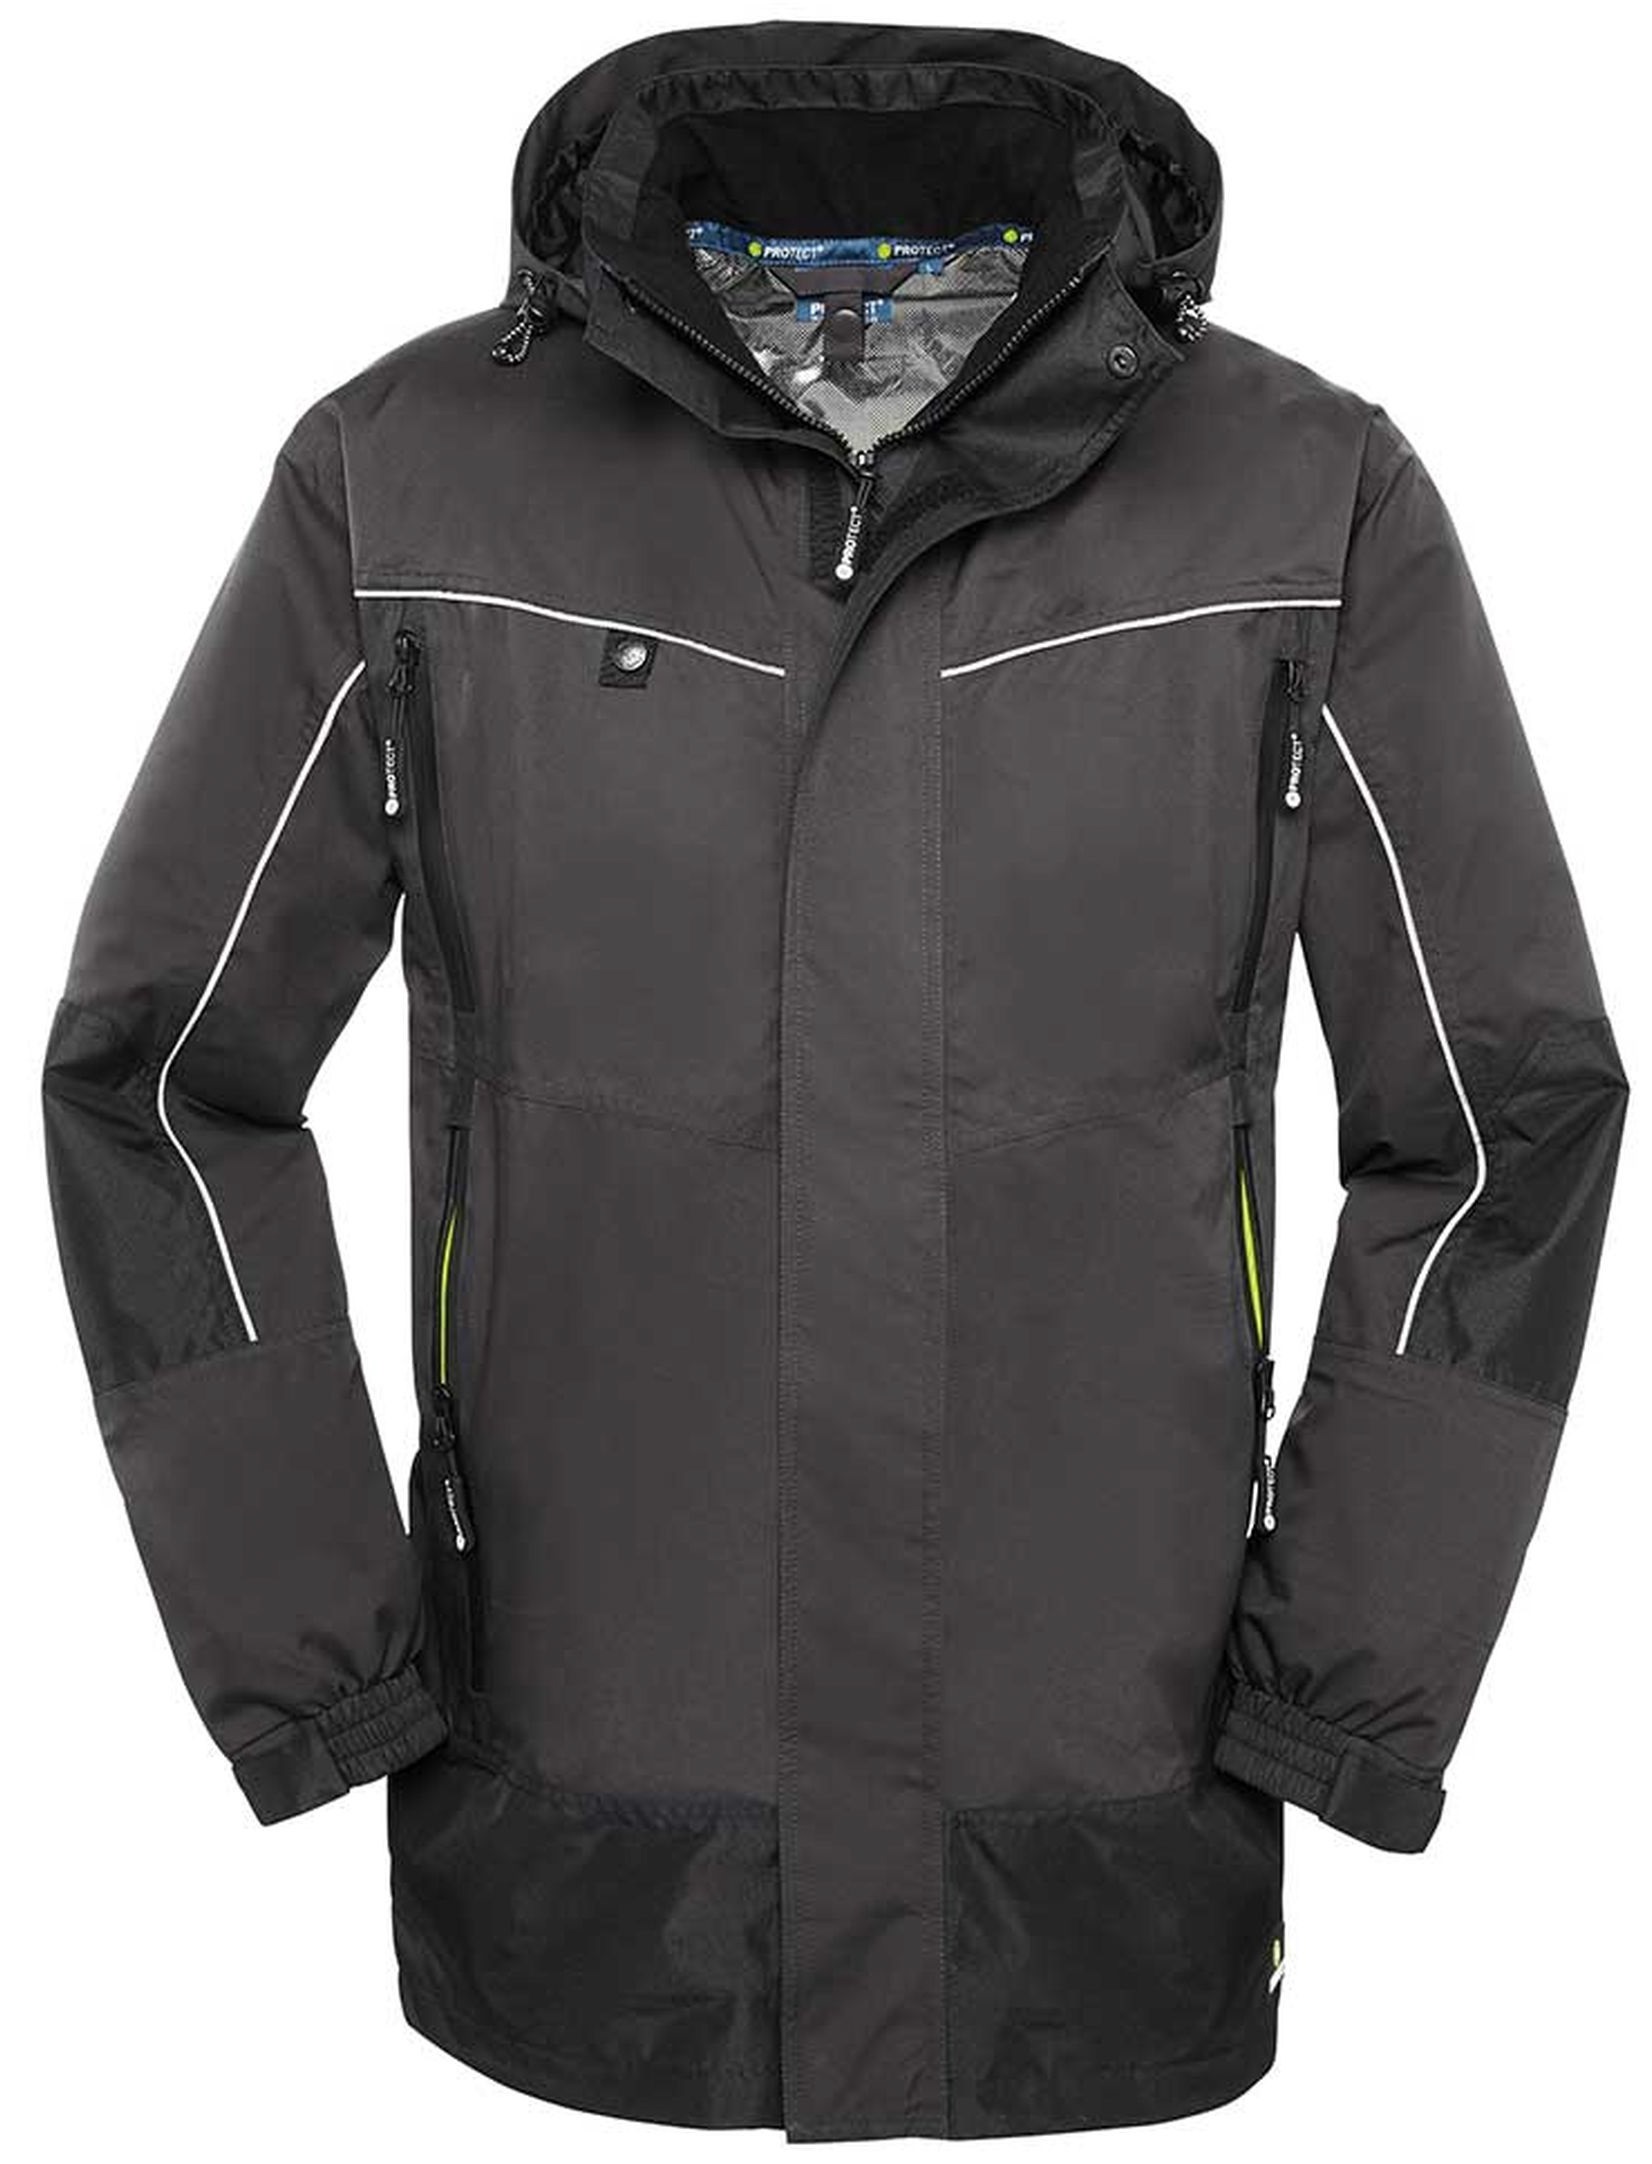 BIG-4-Protect-Kälteschutz, Wetterschutz-Jacke, PHILLY, grau/schwarz
